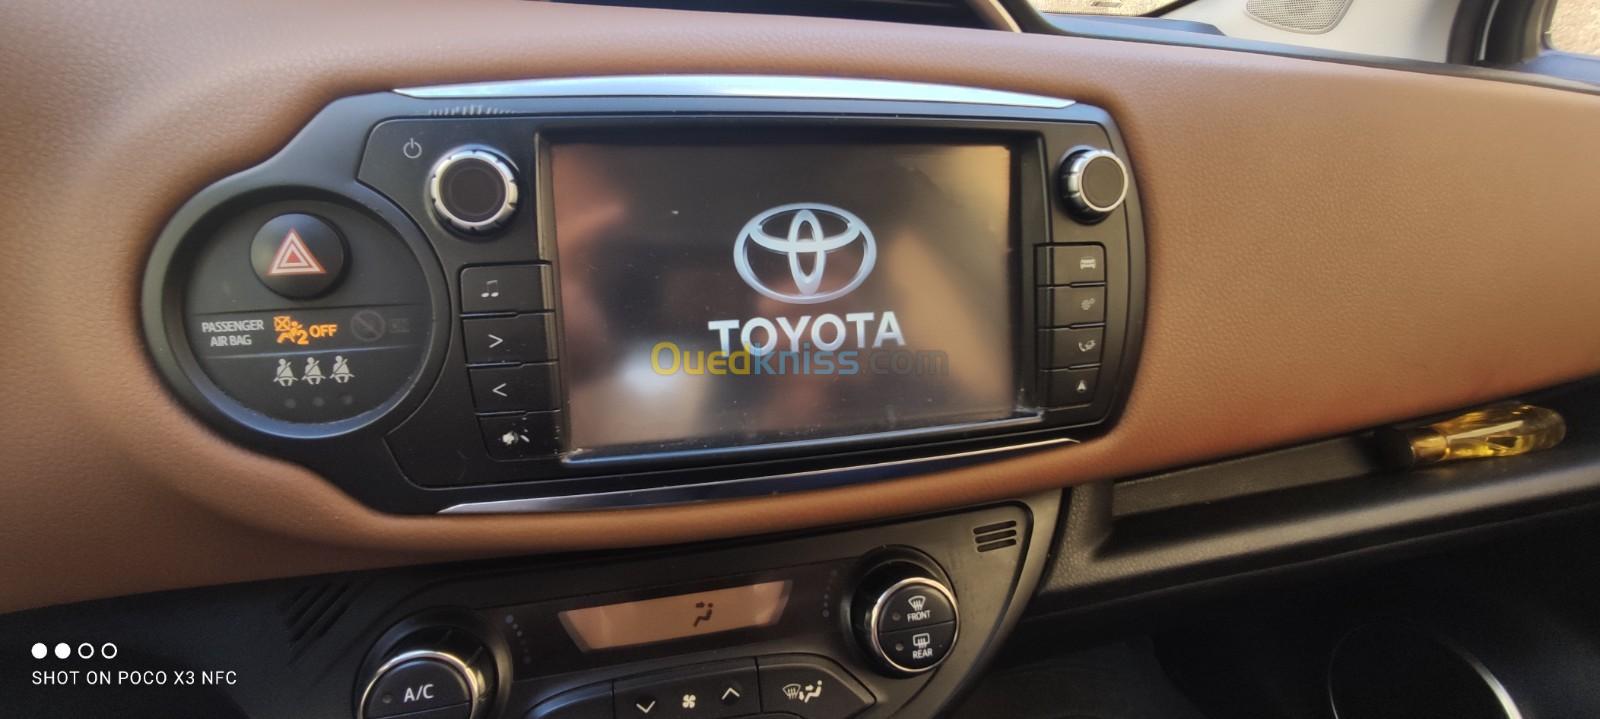 Toyota yaris 2015 touche active